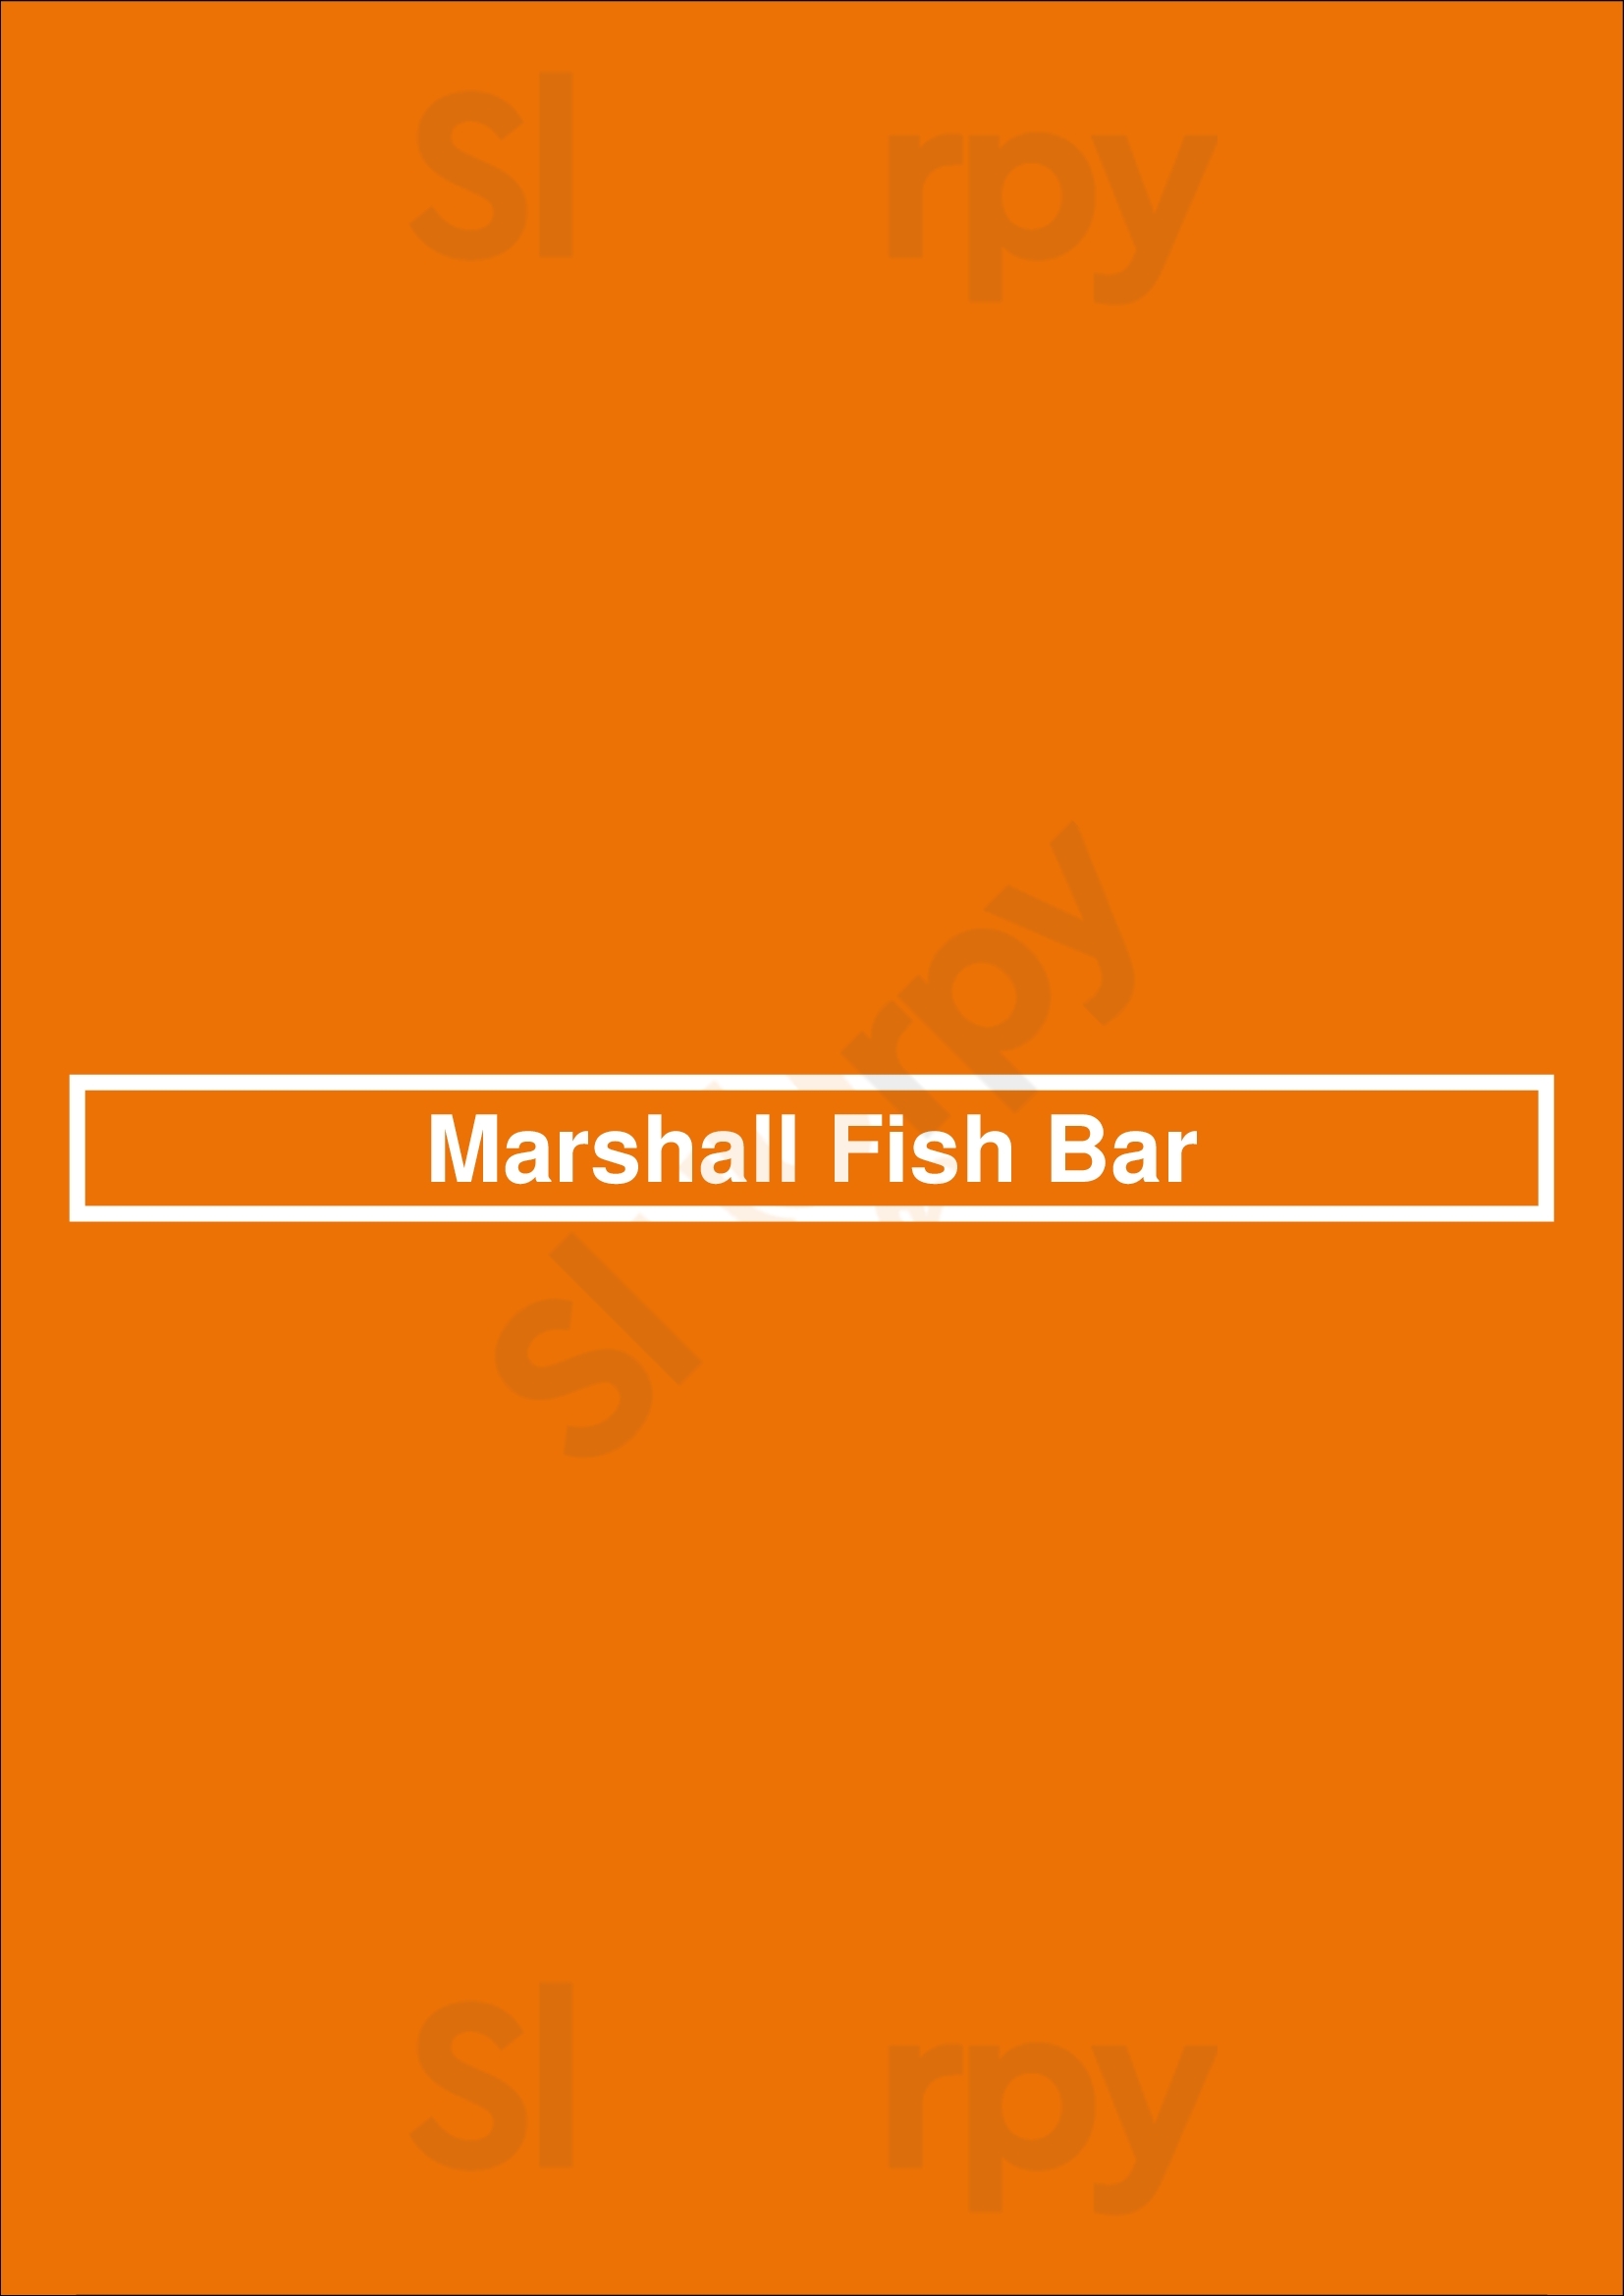 Marshall Fish Bar Leicester Menu - 1